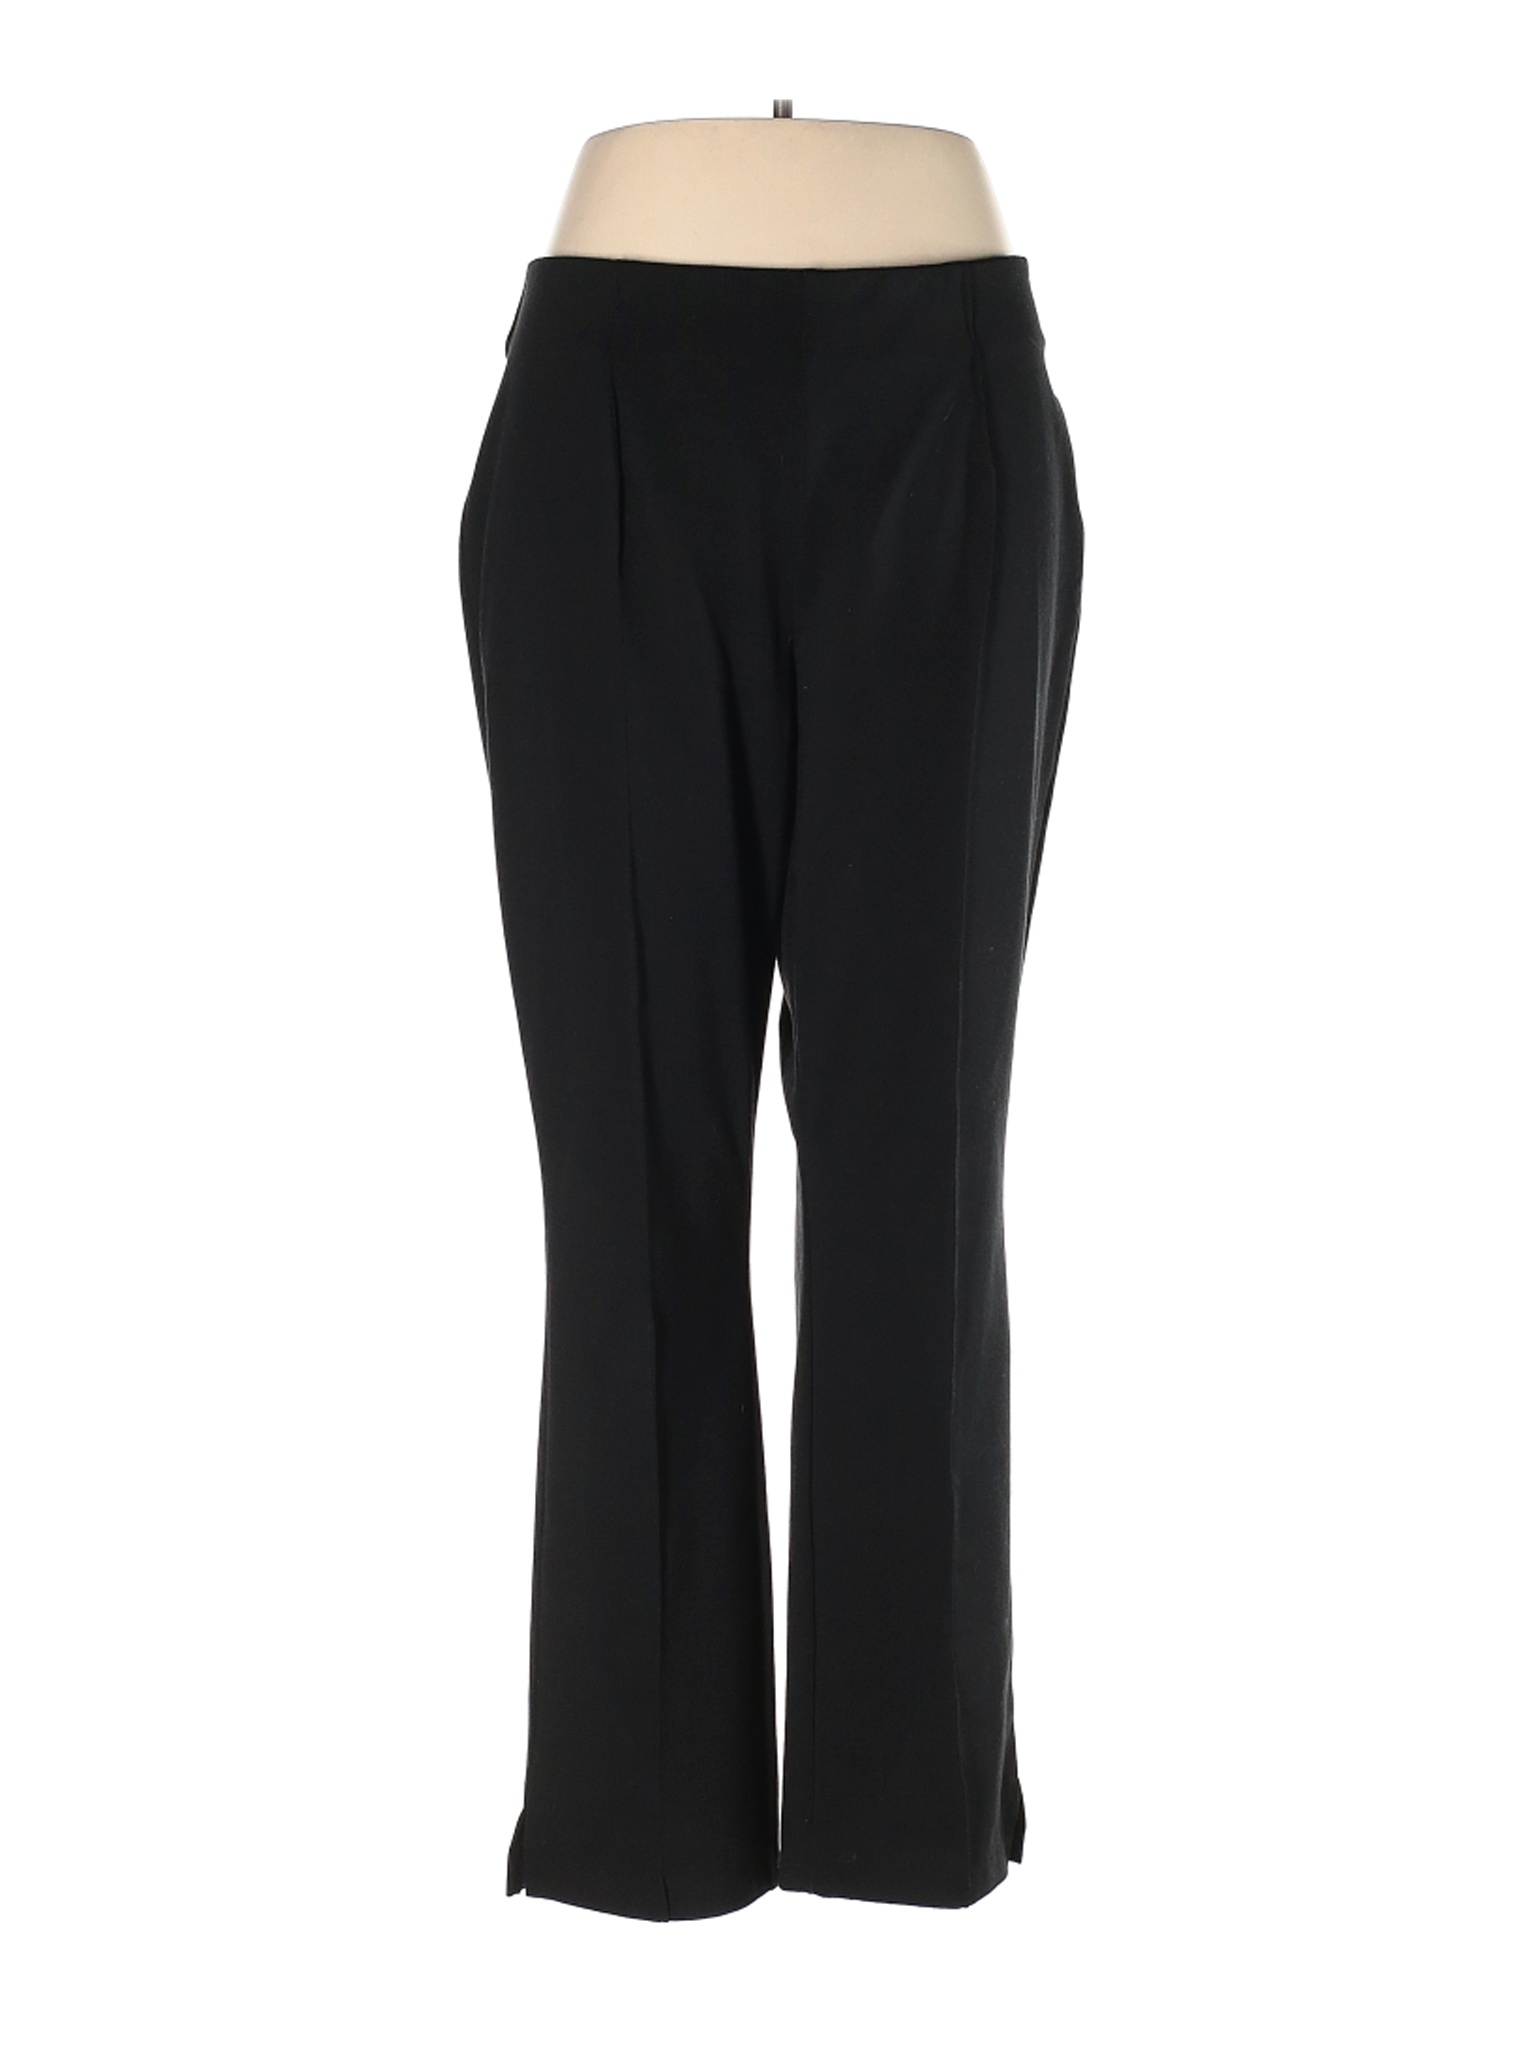 Dana Buchman Women Black Dress Pants XL | eBay